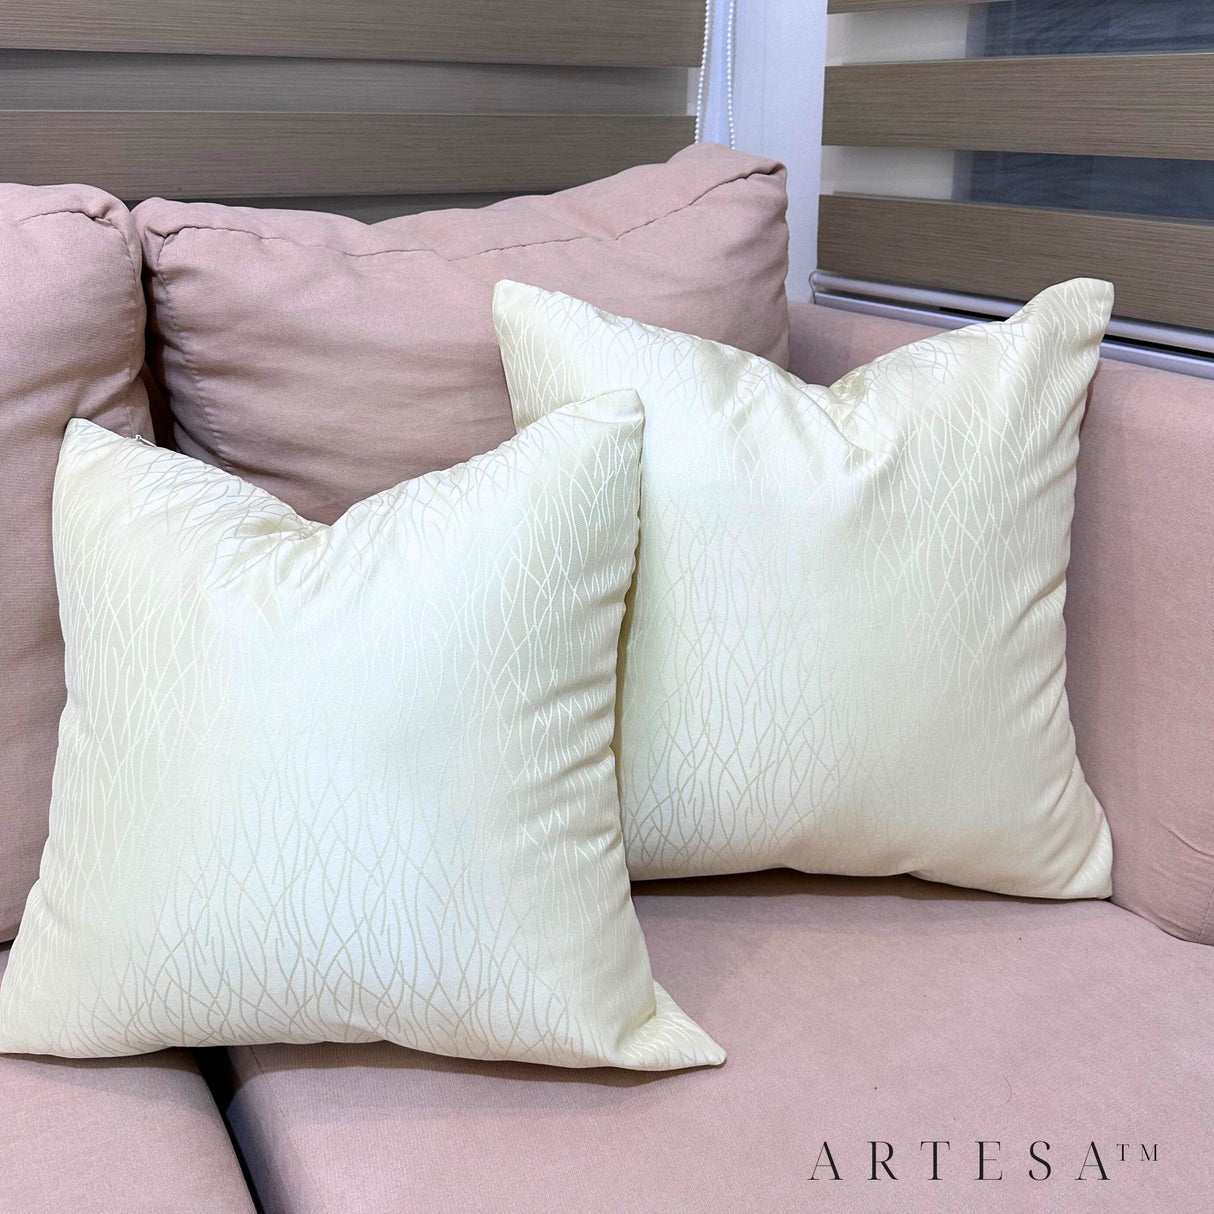 Artesa Amihan Premium Cotton Brocade Throw Pillow Cover with hidden zipper closure - Elegant Home Decor Accent